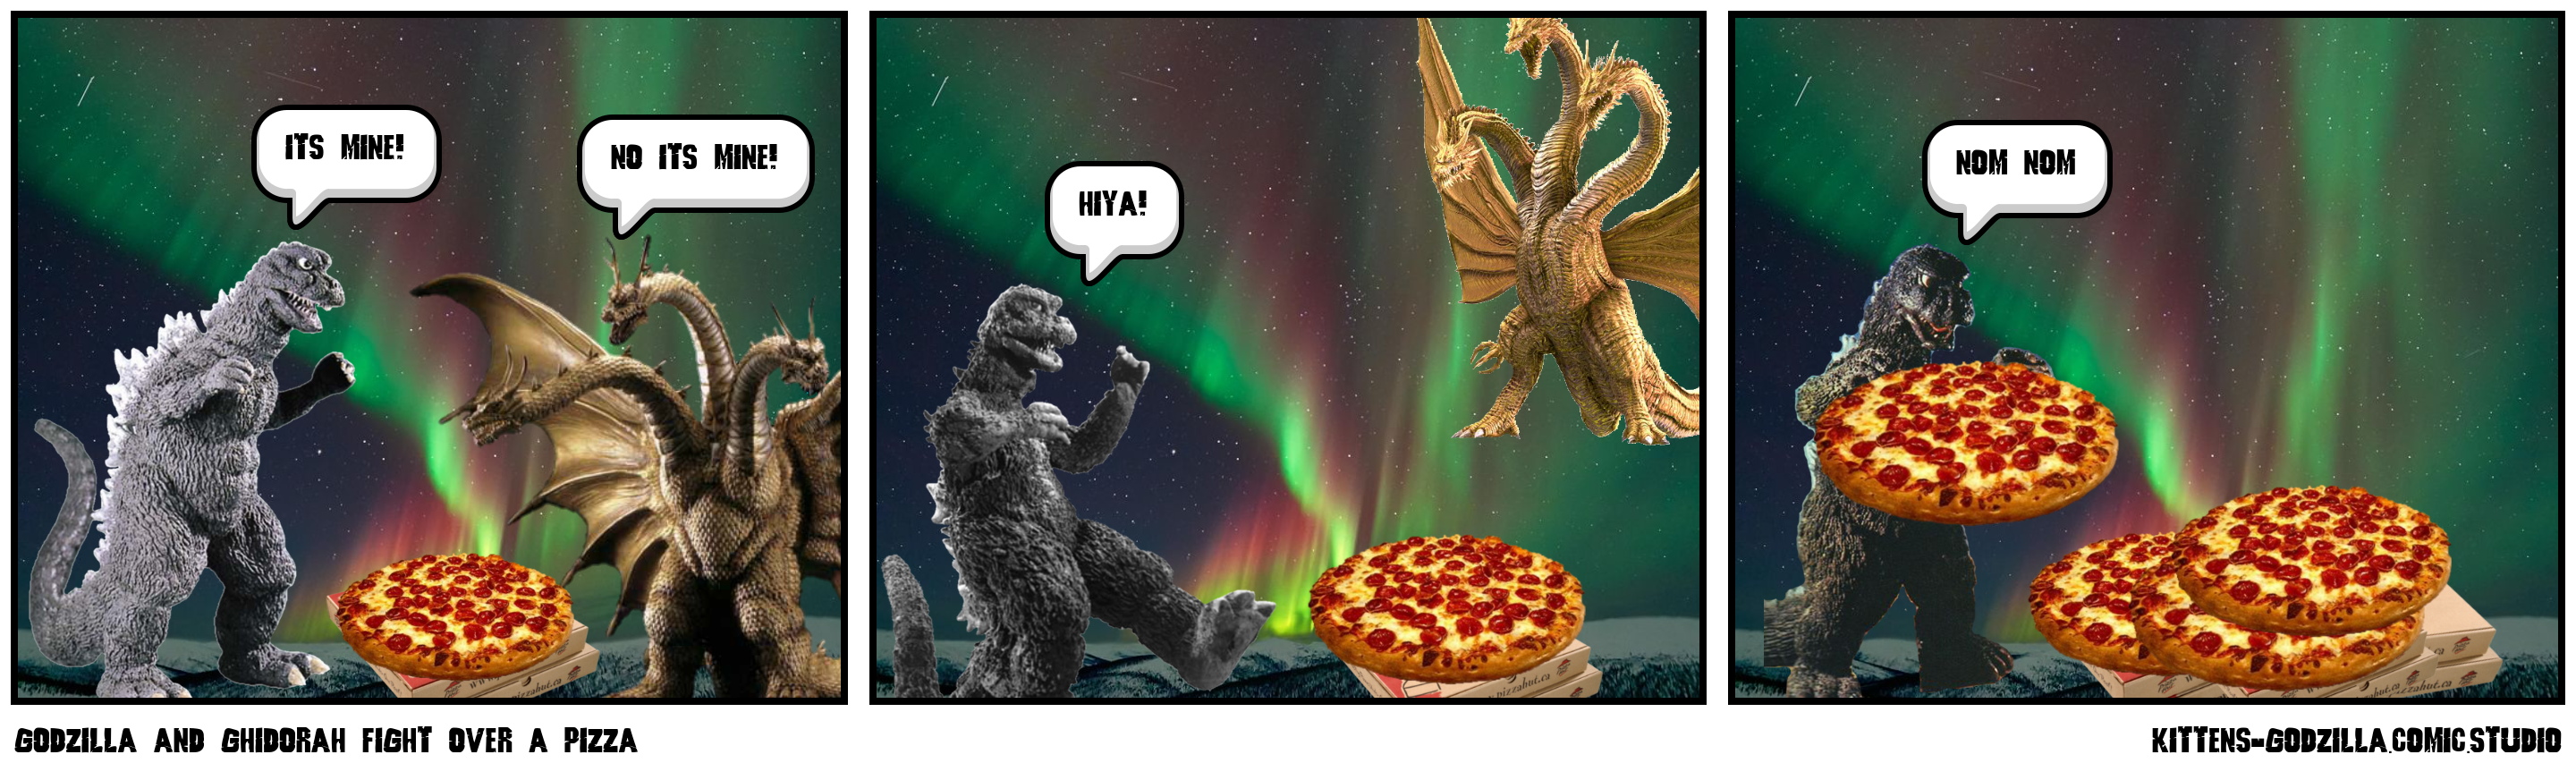 Godzilla and ghidorah fight over a pizza